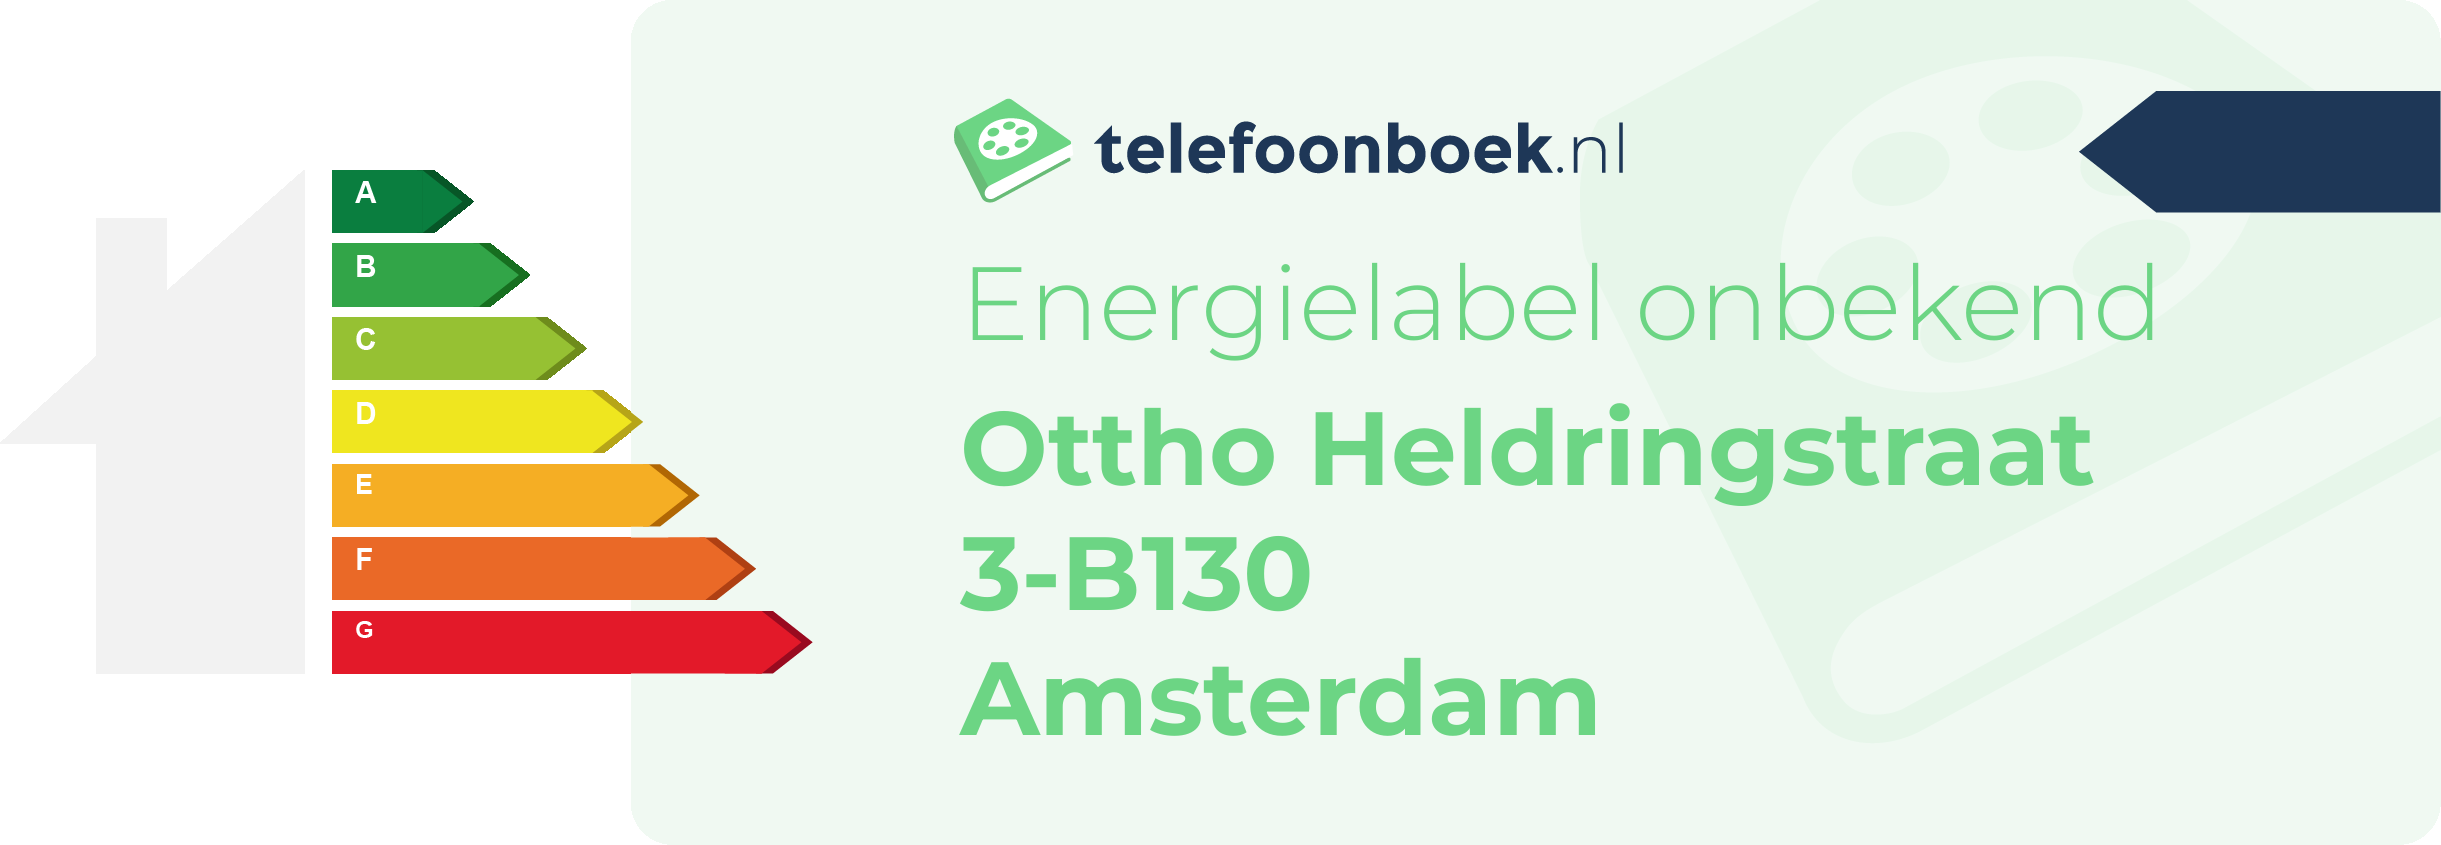 Energielabel Ottho Heldringstraat 3-B130 Amsterdam